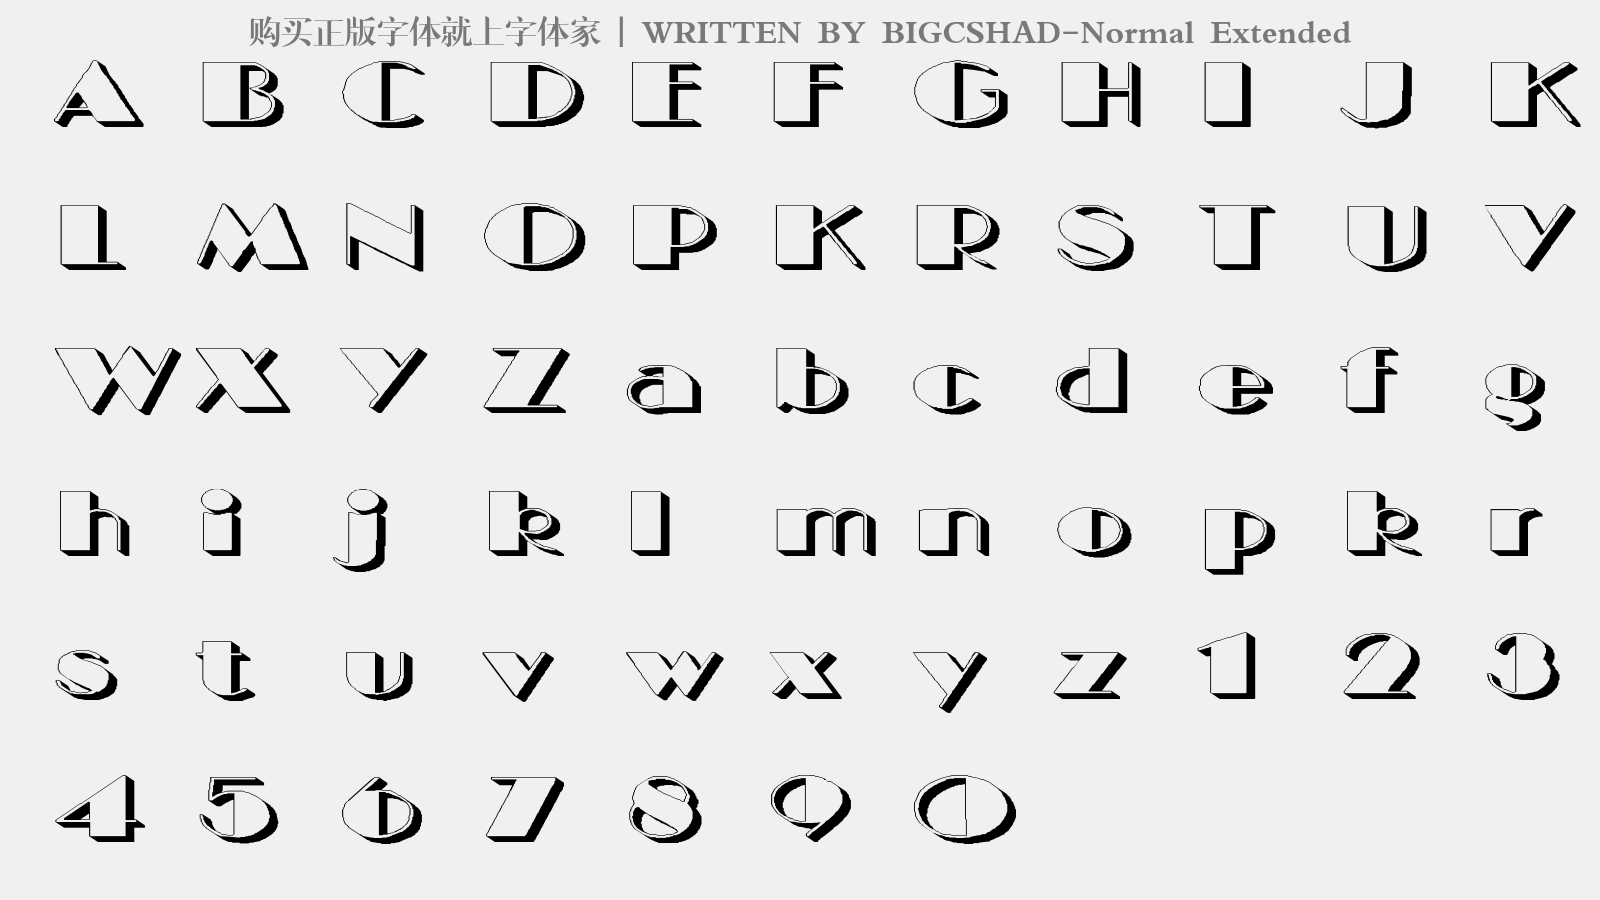 BIGCSHAD-Normal Extended - 大写字母/小写字母/数字